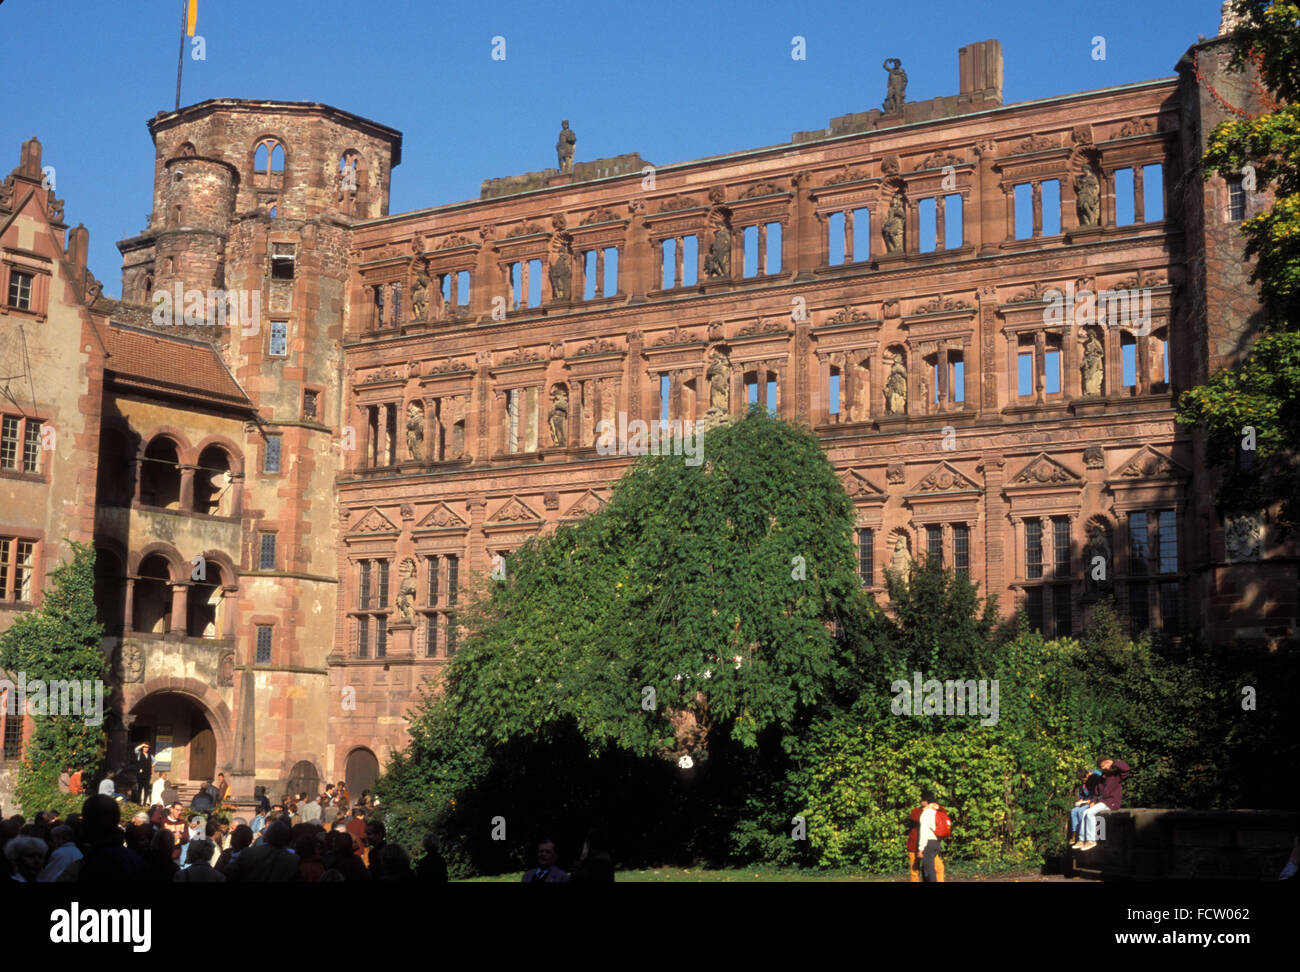 L'Europe, l'Allemagne, Heidelberg, façade du château. Europa, Deutschland, Heidelberg, Das Schloss. Banque D'Images